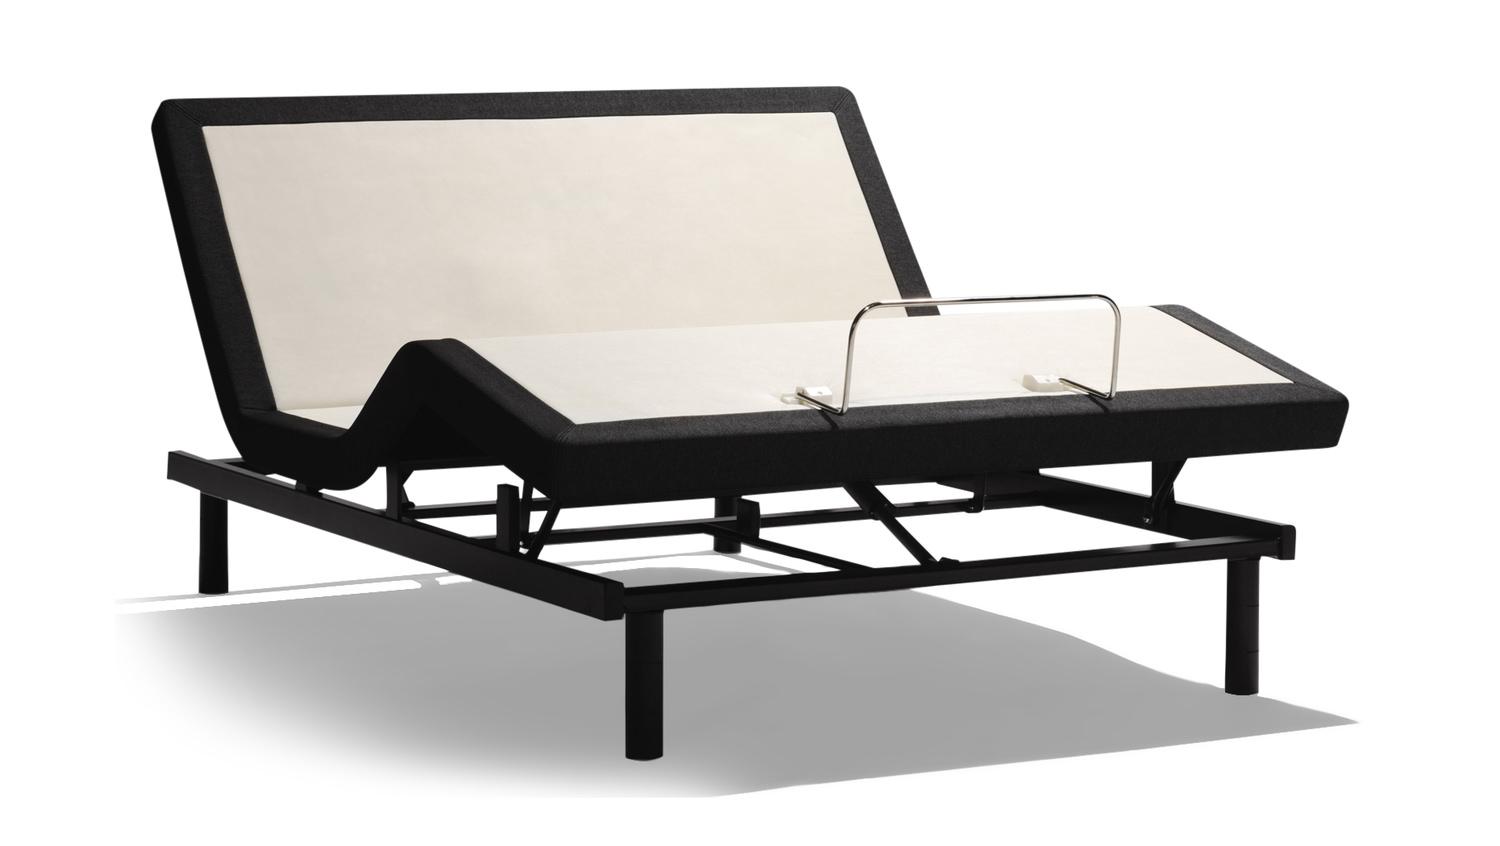 Ease 3 0 Adjustable Base By Stearns Foster Hom Furniture